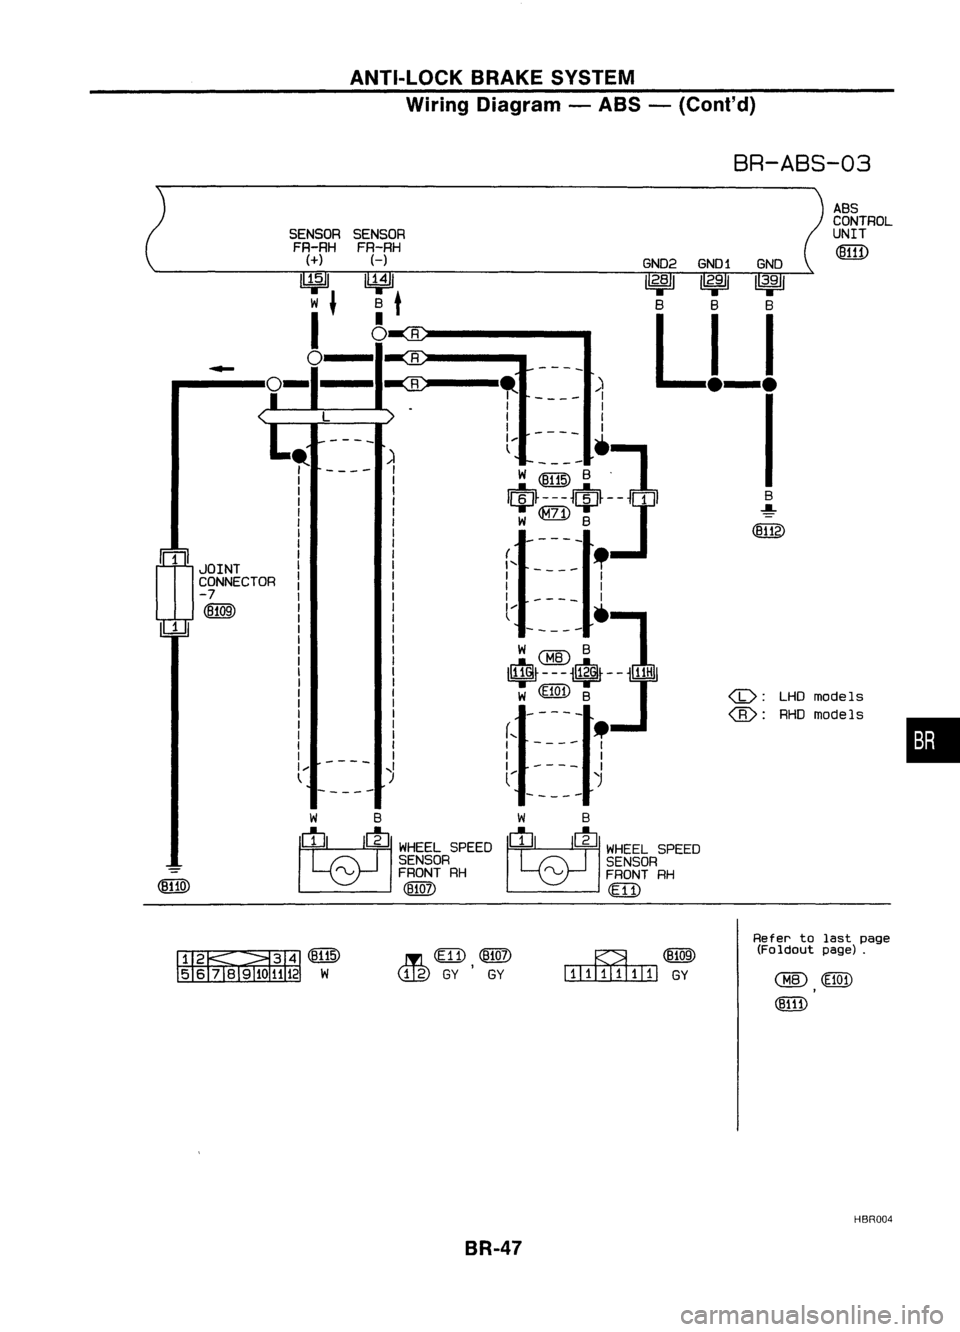 NISSAN ALMERA N15 1995  Service Manual ANTI-LOCKBRAKESYSTEM
Wiring Diagram -ABS -(Cont'd)

BR-ABS-03

•

ABS

CONTROL

UNIT

<em>

LHO models
RHO models

(jJ:

(8):

GN02
GNO1 GNO

12.81 12.911
3•
9
1

B BB

Ll-l

I

----

)
I

1

